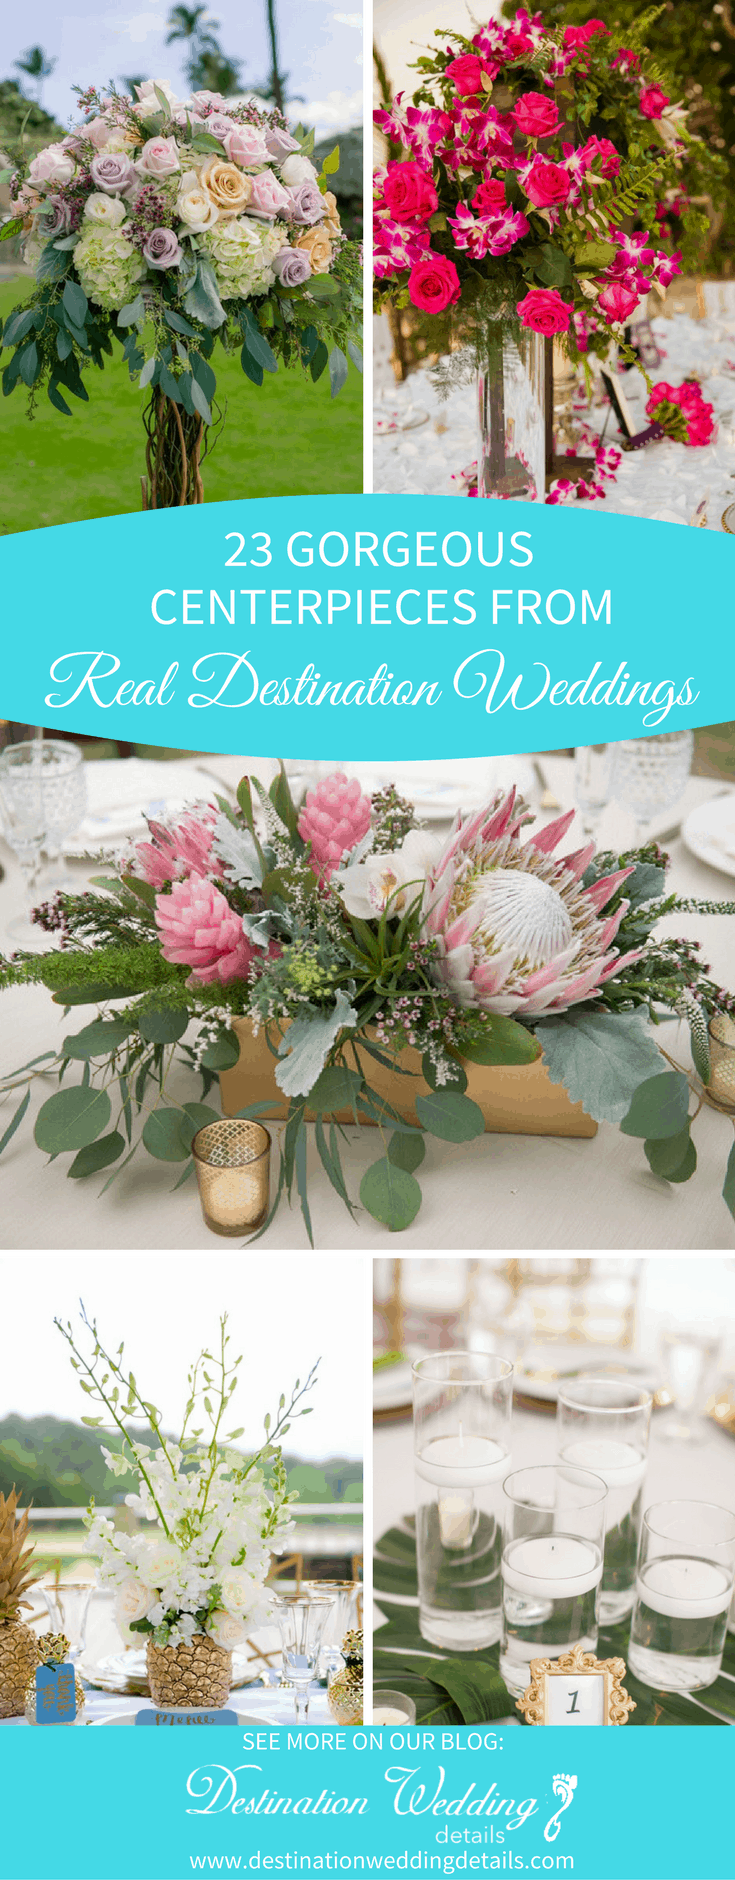 real destination wedding centerpieces